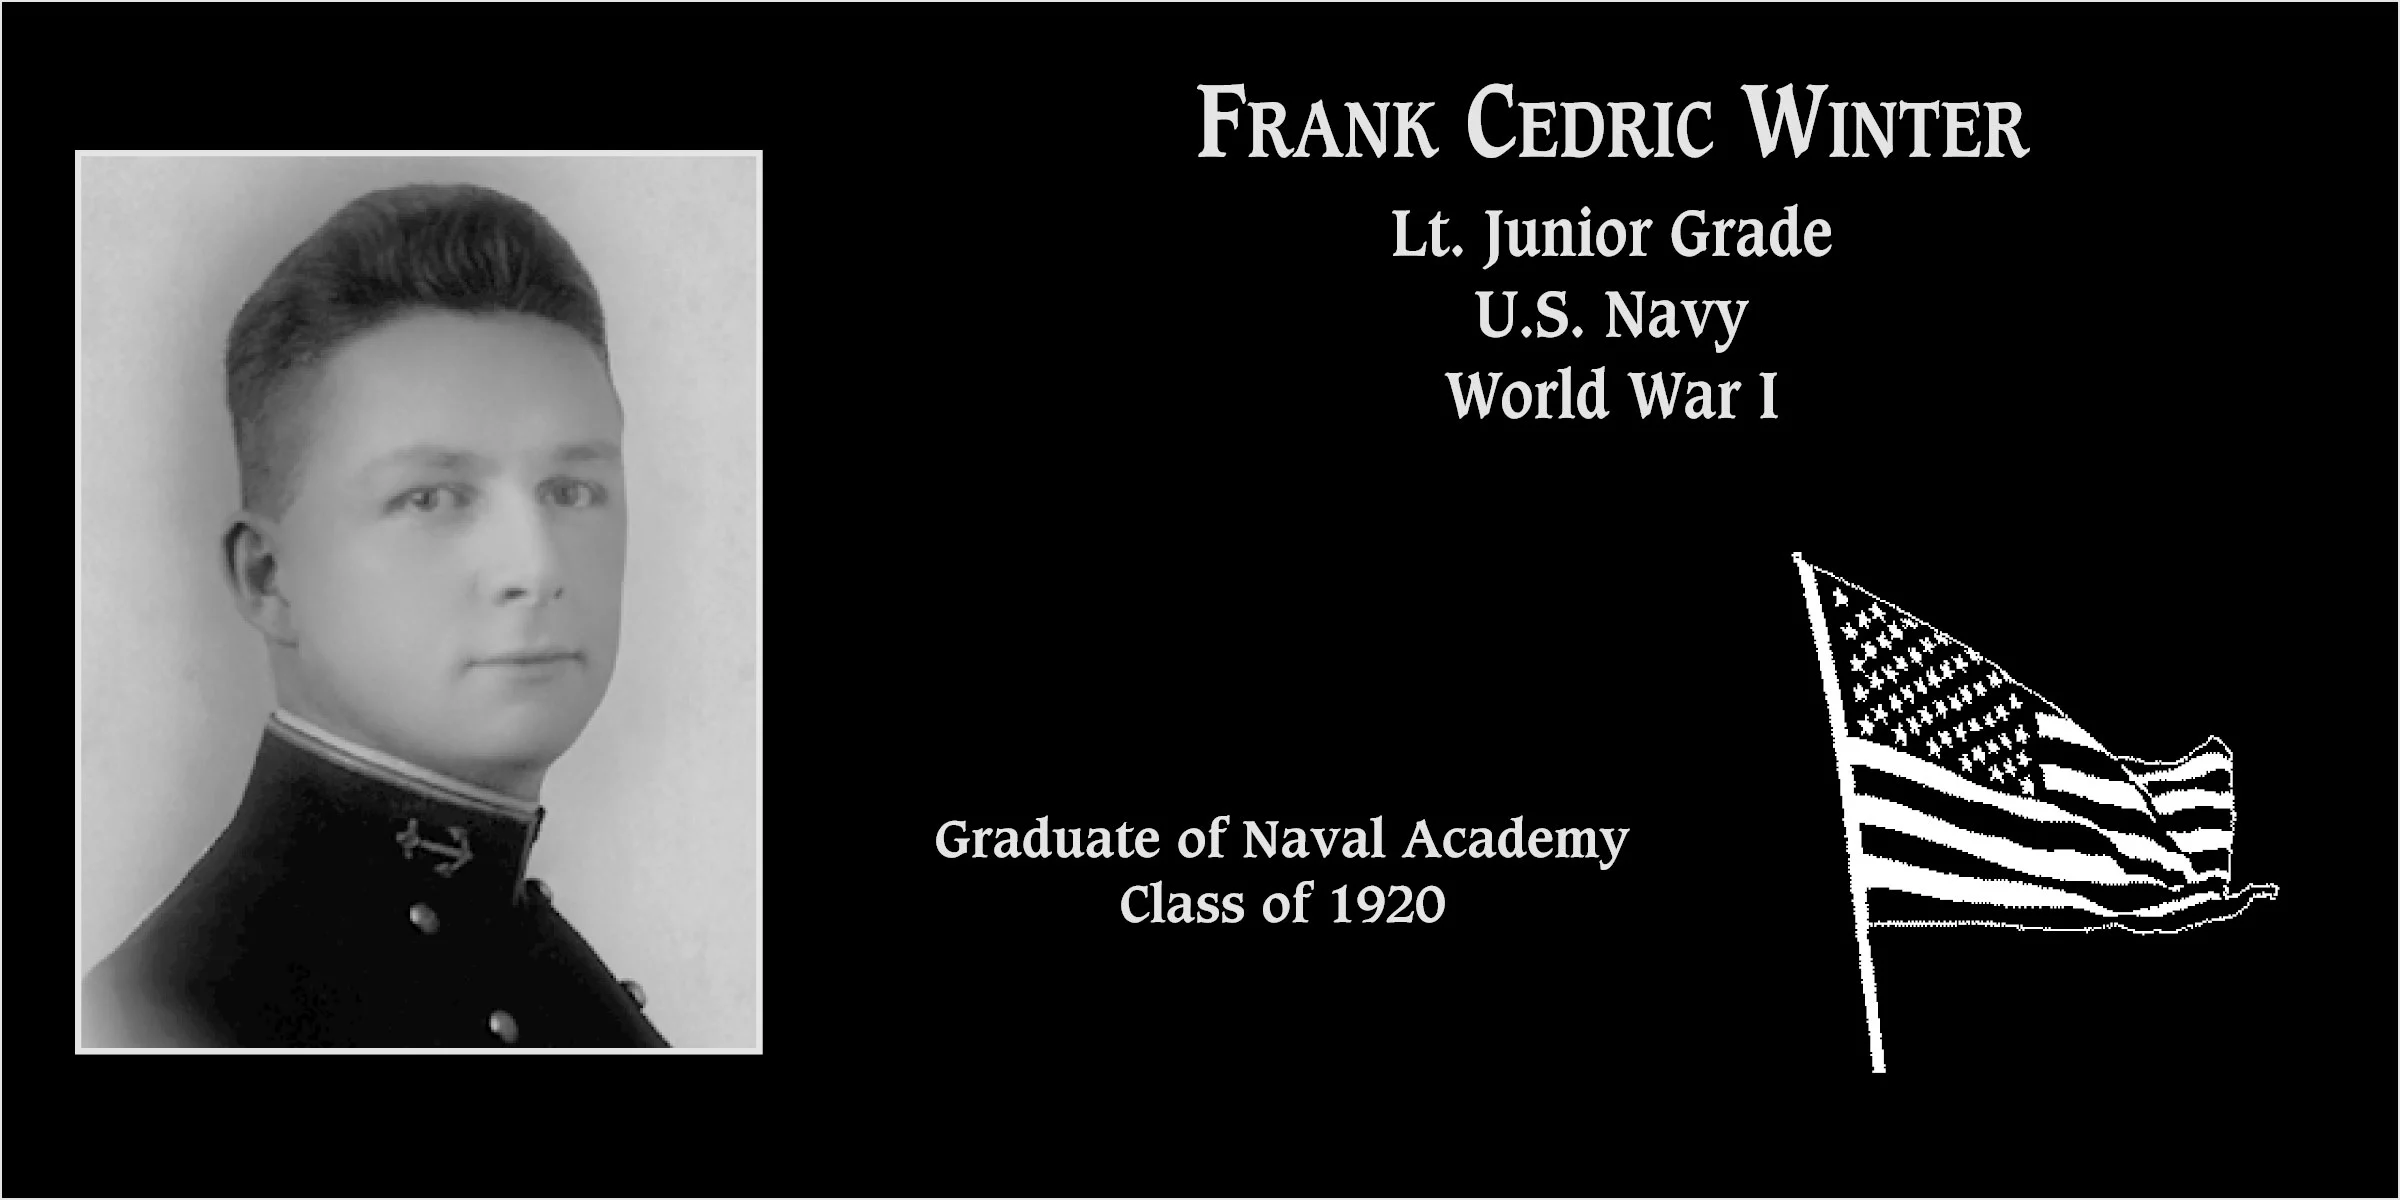 Frank Cedric Winter